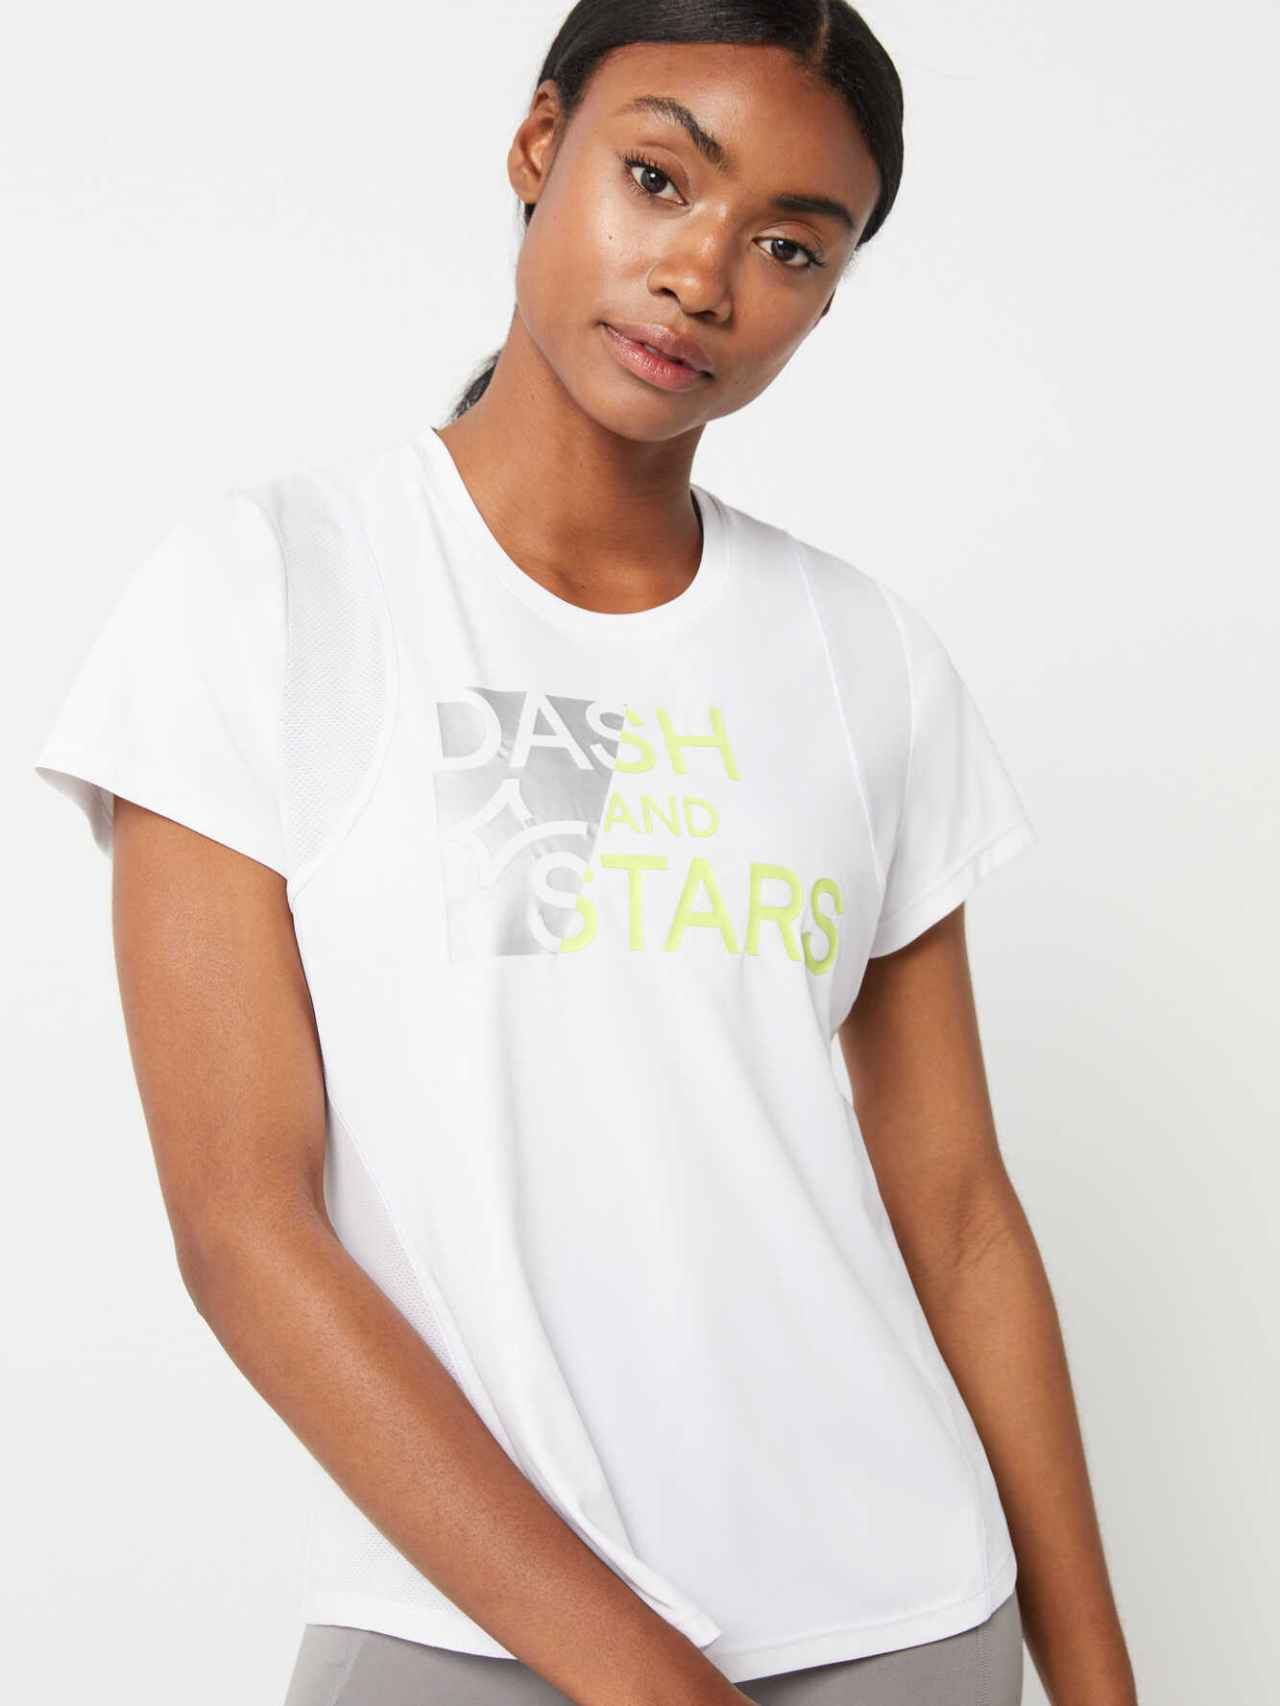 Camisa técnica blanca de Dash and Stars (20,99 €)